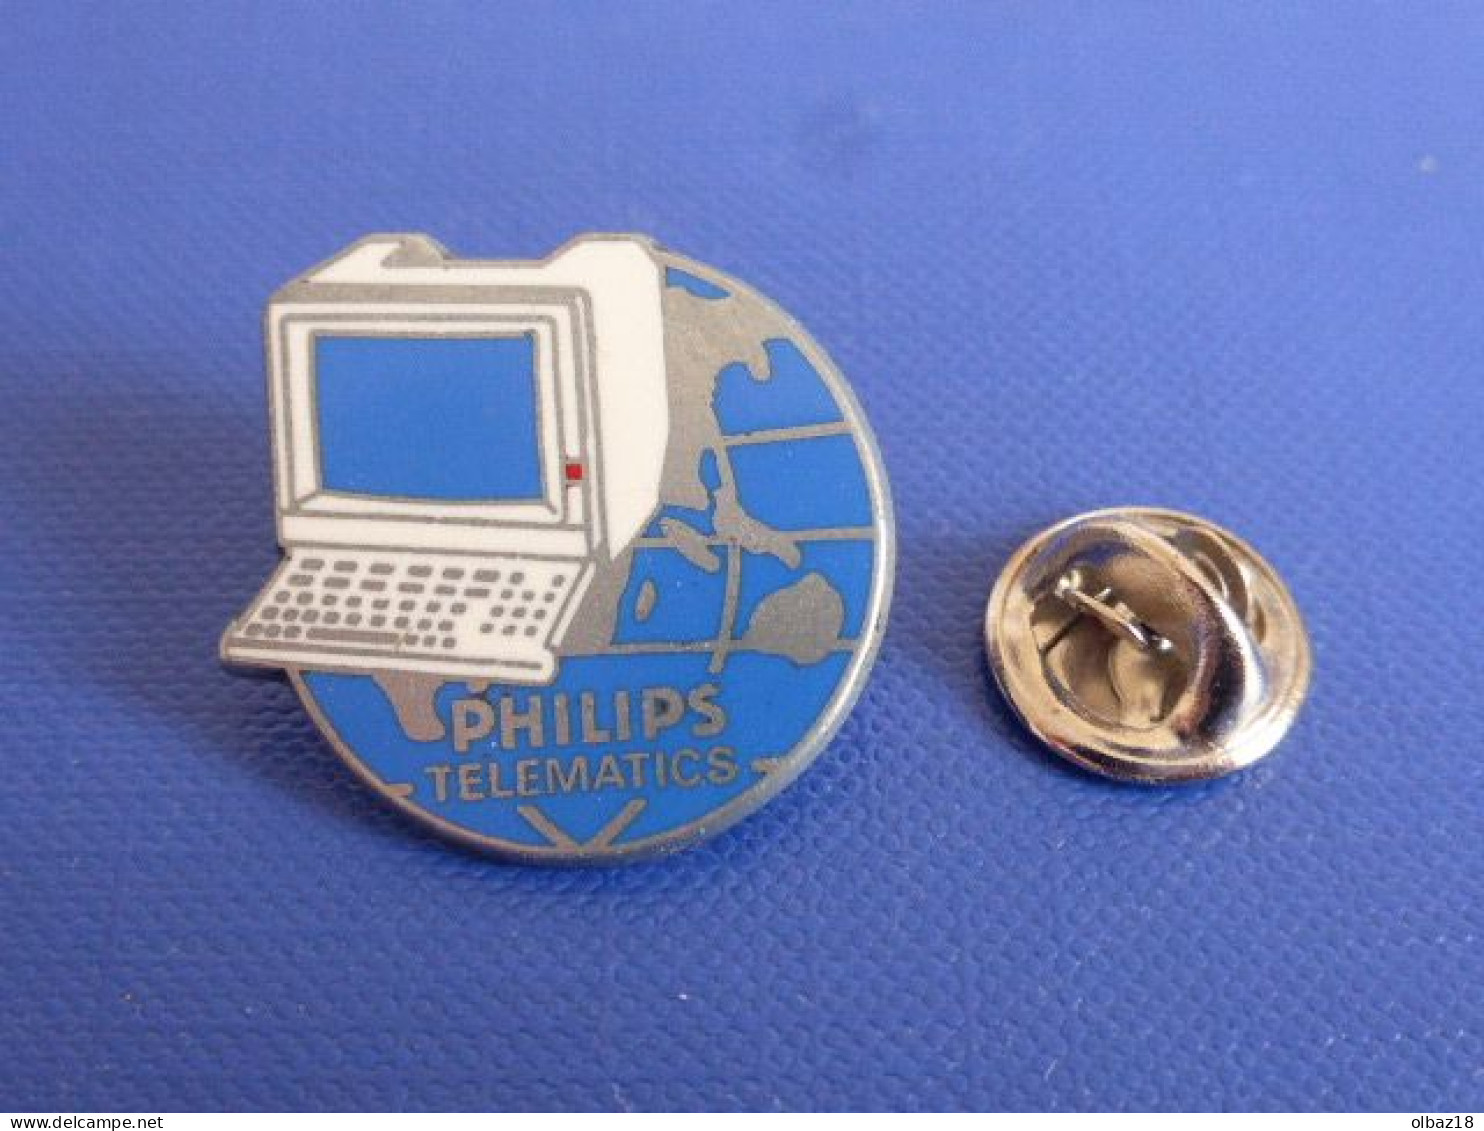 Pin's Brut Arthus Bertrand Philips Telematics - Minitel Informatique Ordinateur Mappemonde Terre - Pin's Non Doré (AA13) - Arthus Bertrand